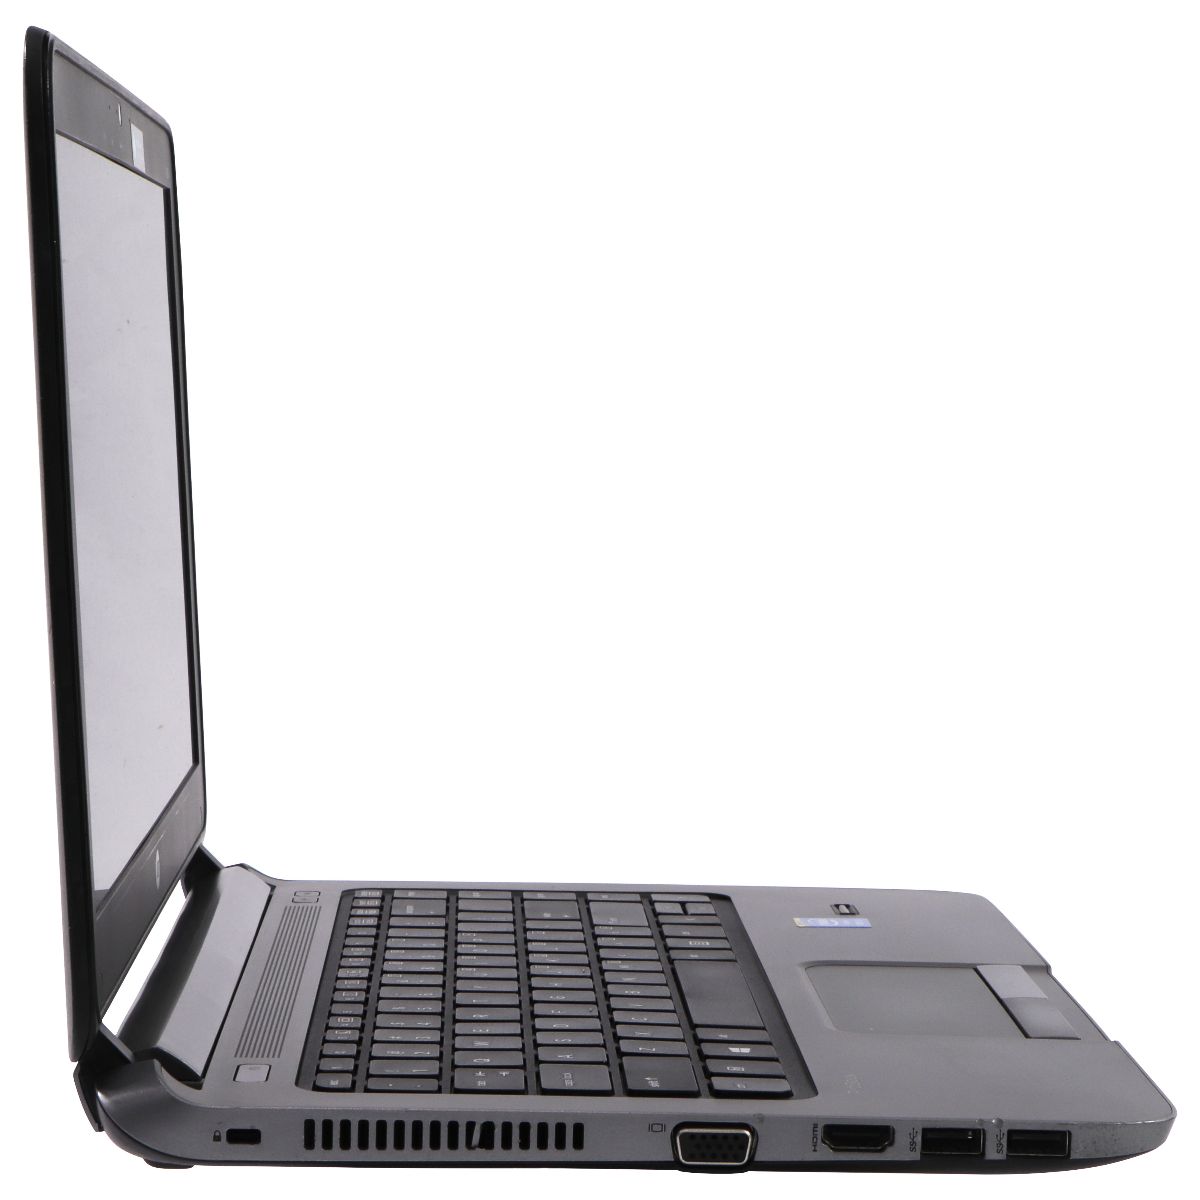 HP ProBook 430 G1 (13.3-in) Laptop E3U86UT i3-4010U / 500GB HDD / 4GB / 10 Home Laptops - PC Laptops & Netbooks HP    - Simple Cell Bulk Wholesale Pricing - USA Seller